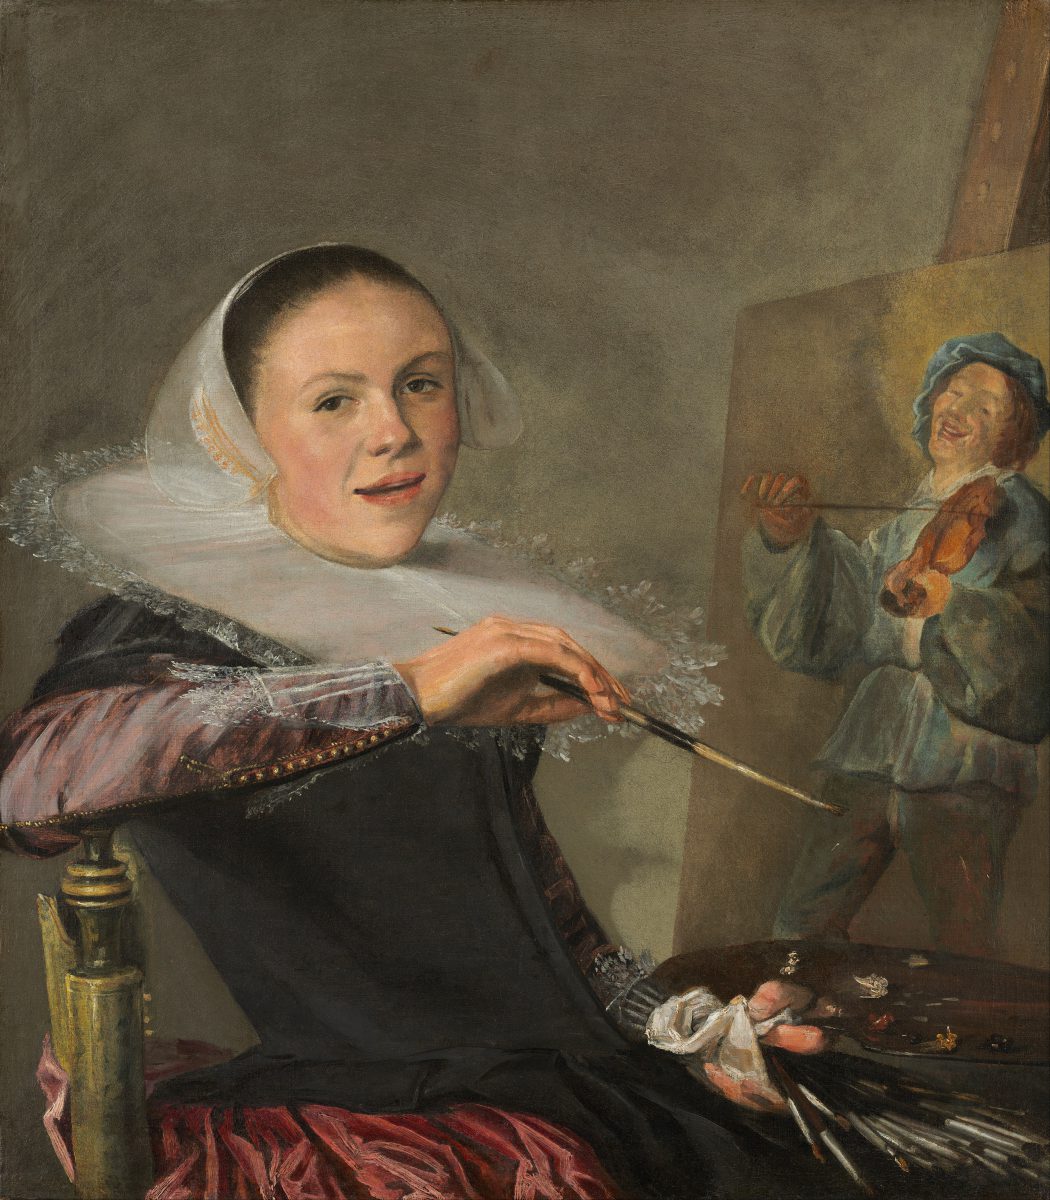 Judith-Leyster-Autoportrait-1633-1050x1200.jpg